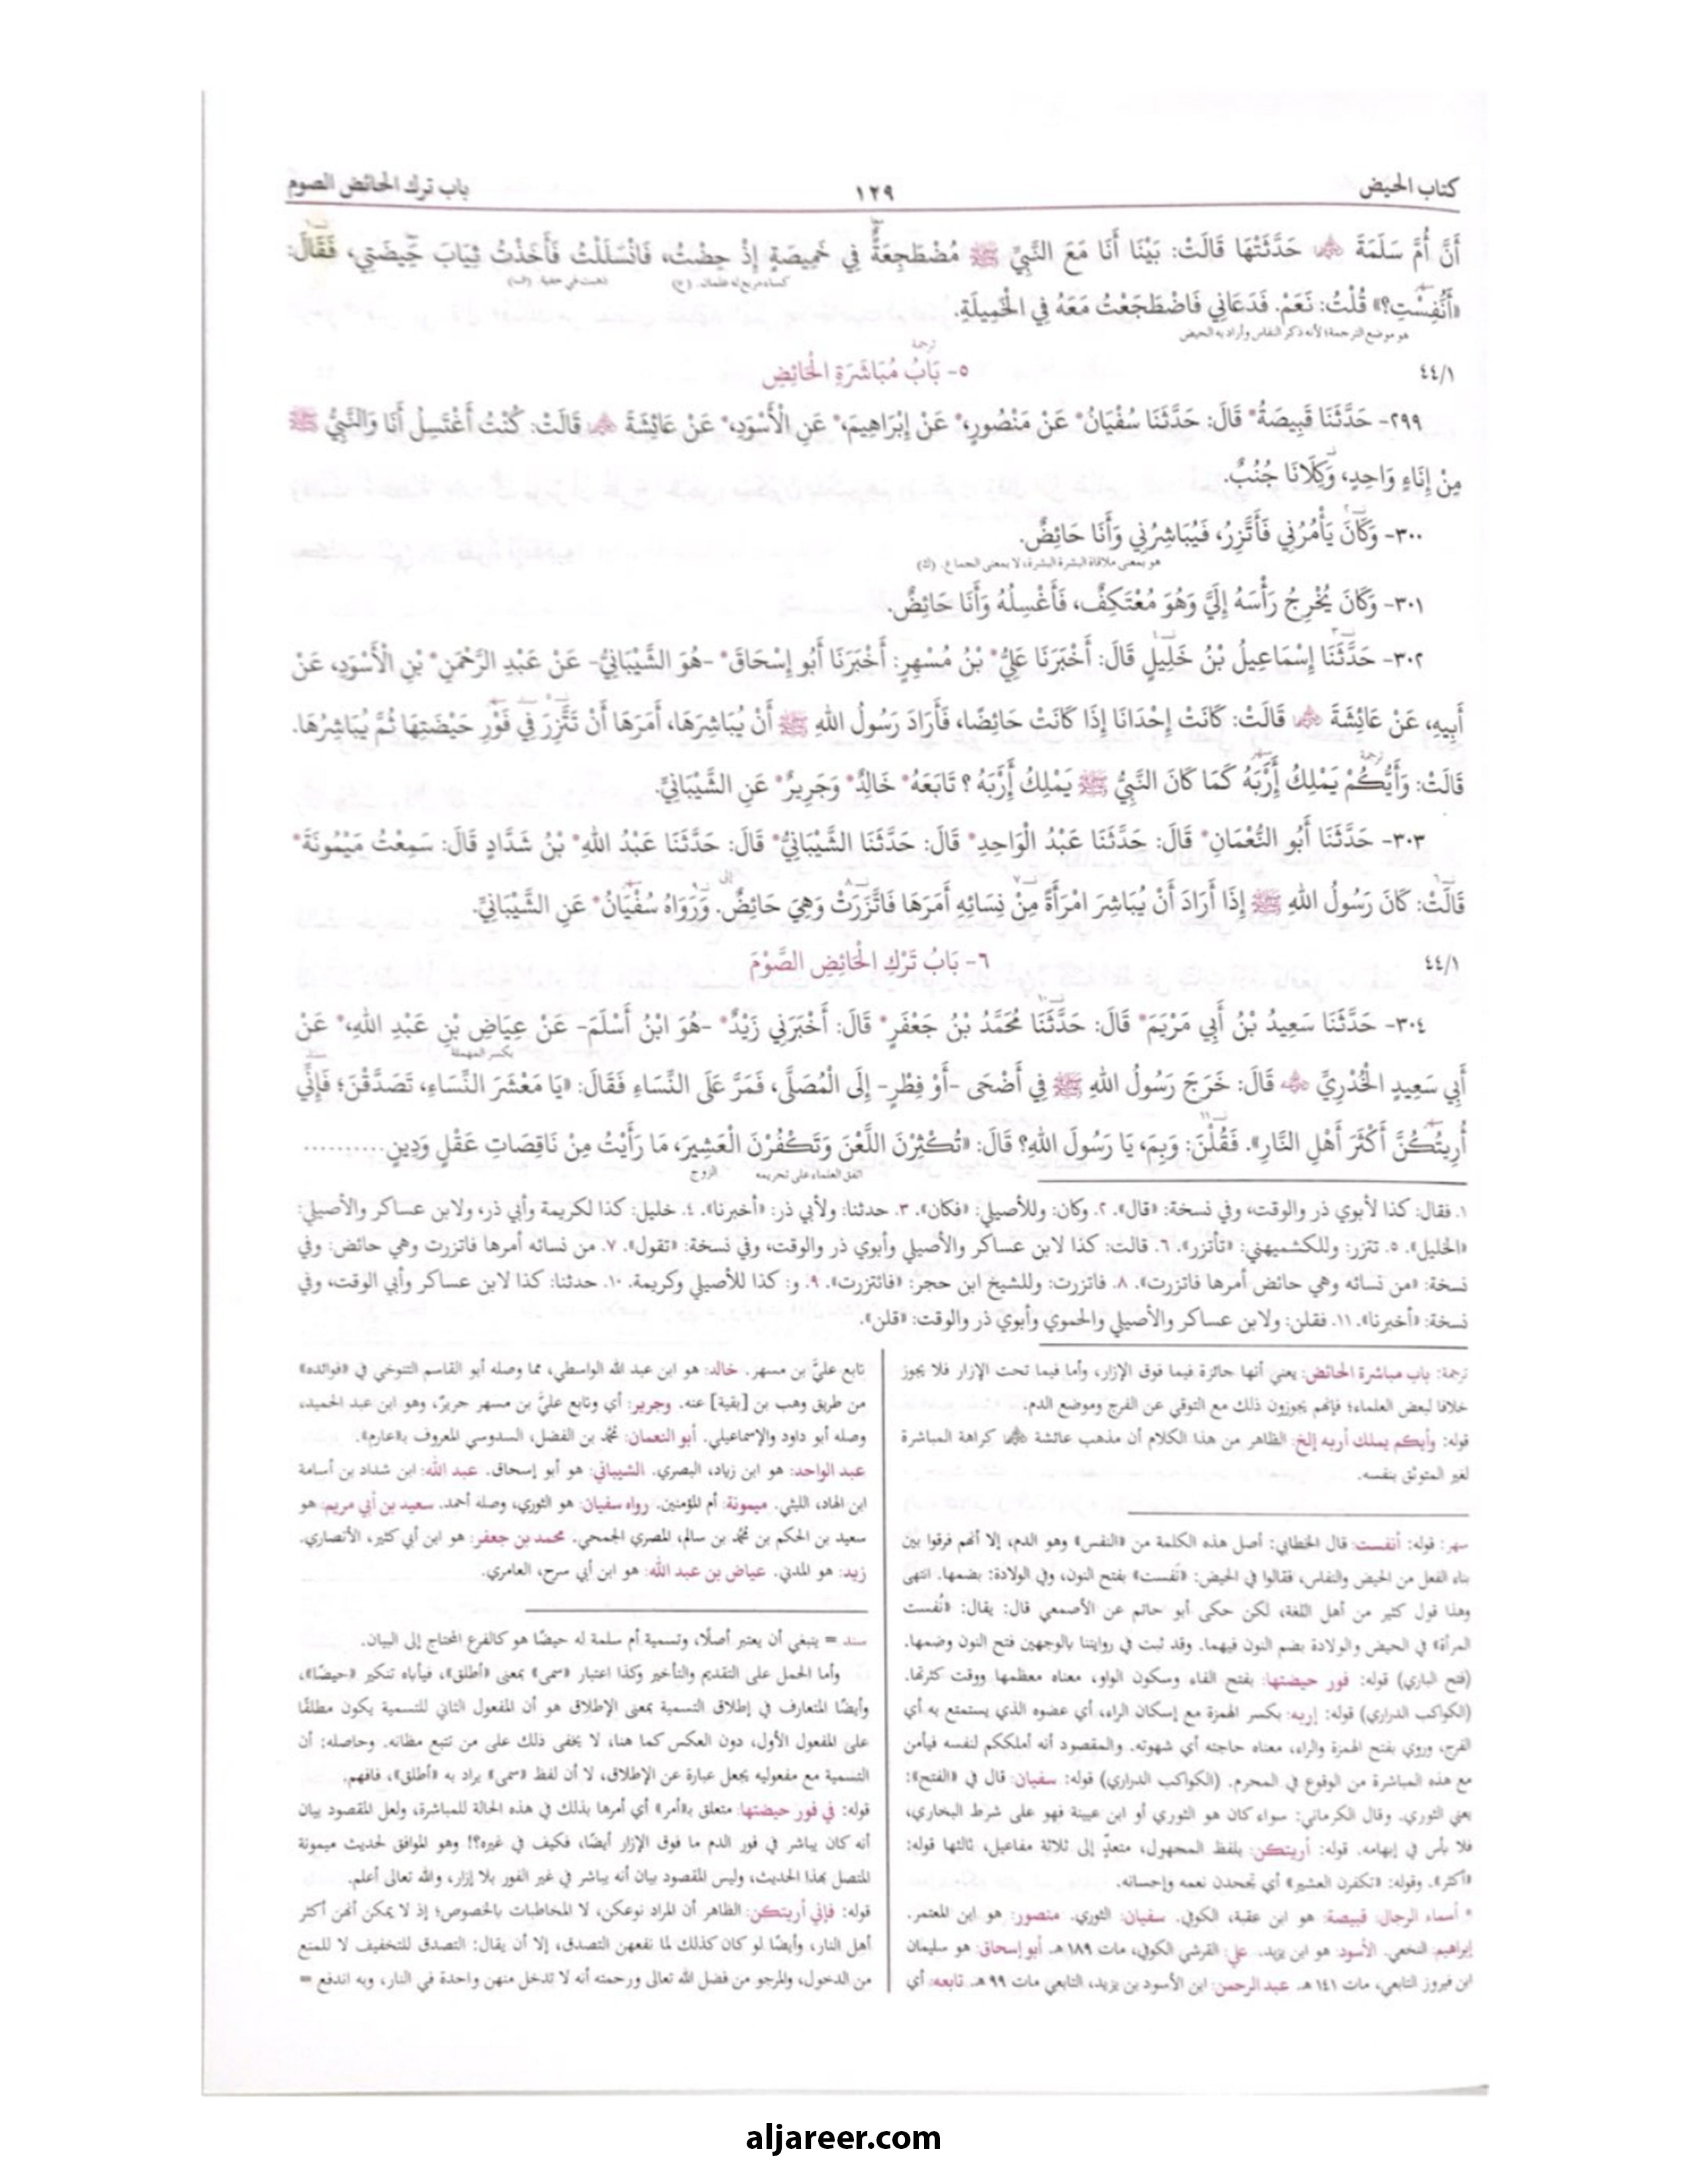 Sahih Al Bukhari (2 VOLUME SET - BUSHRA) - aljareer online 